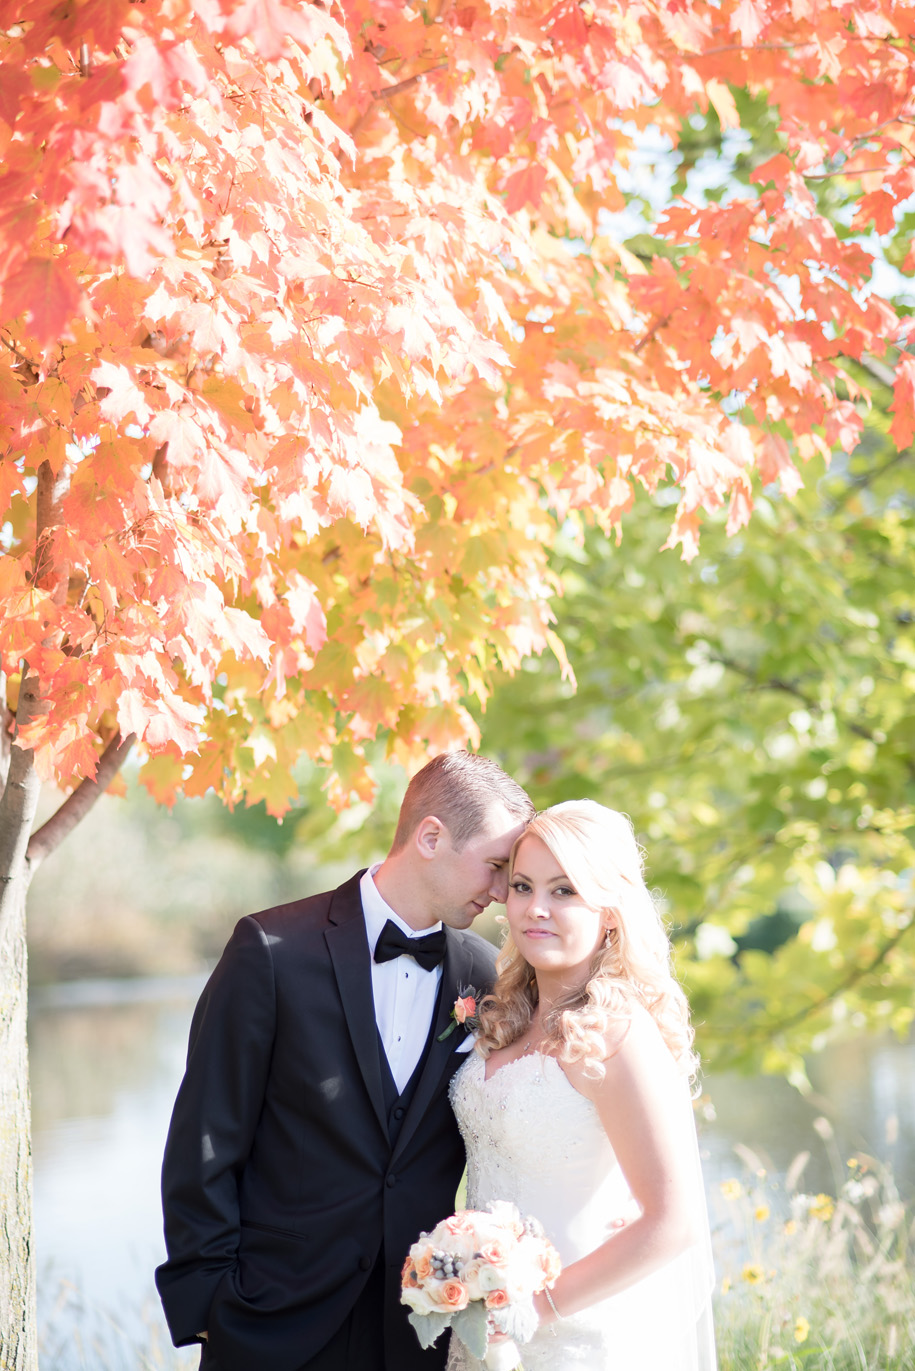 George George Park Bride and groom portraits at a fall wedding in Michigan by Kari Dawson